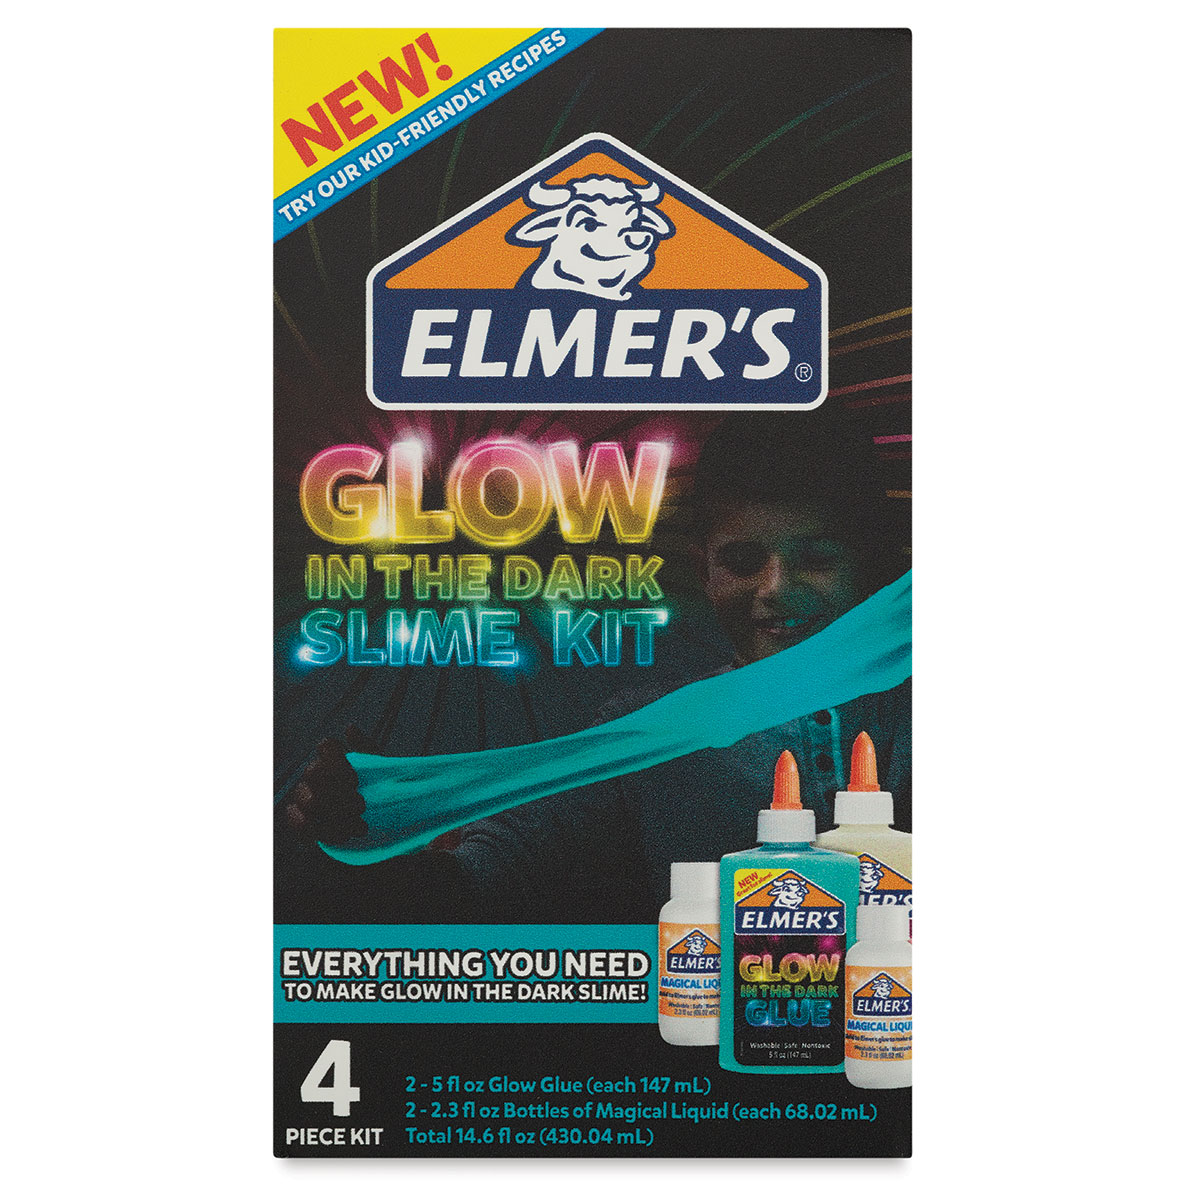 Elmer's 5 fl. oz Glow In The Dark Glue Natural